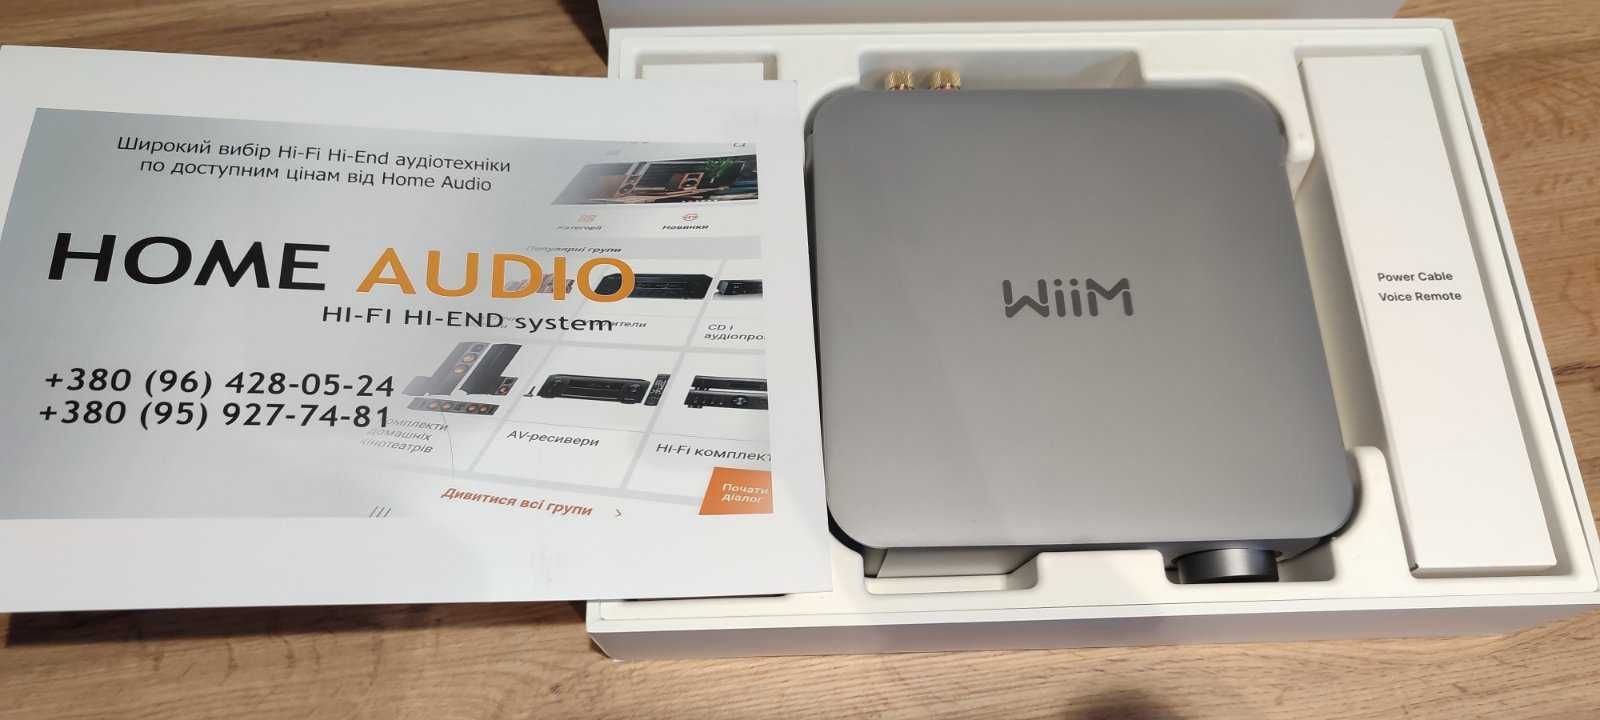 Мережевий програвач WiiM Pro ( WiiM Pro Plus/Wiim Amp)